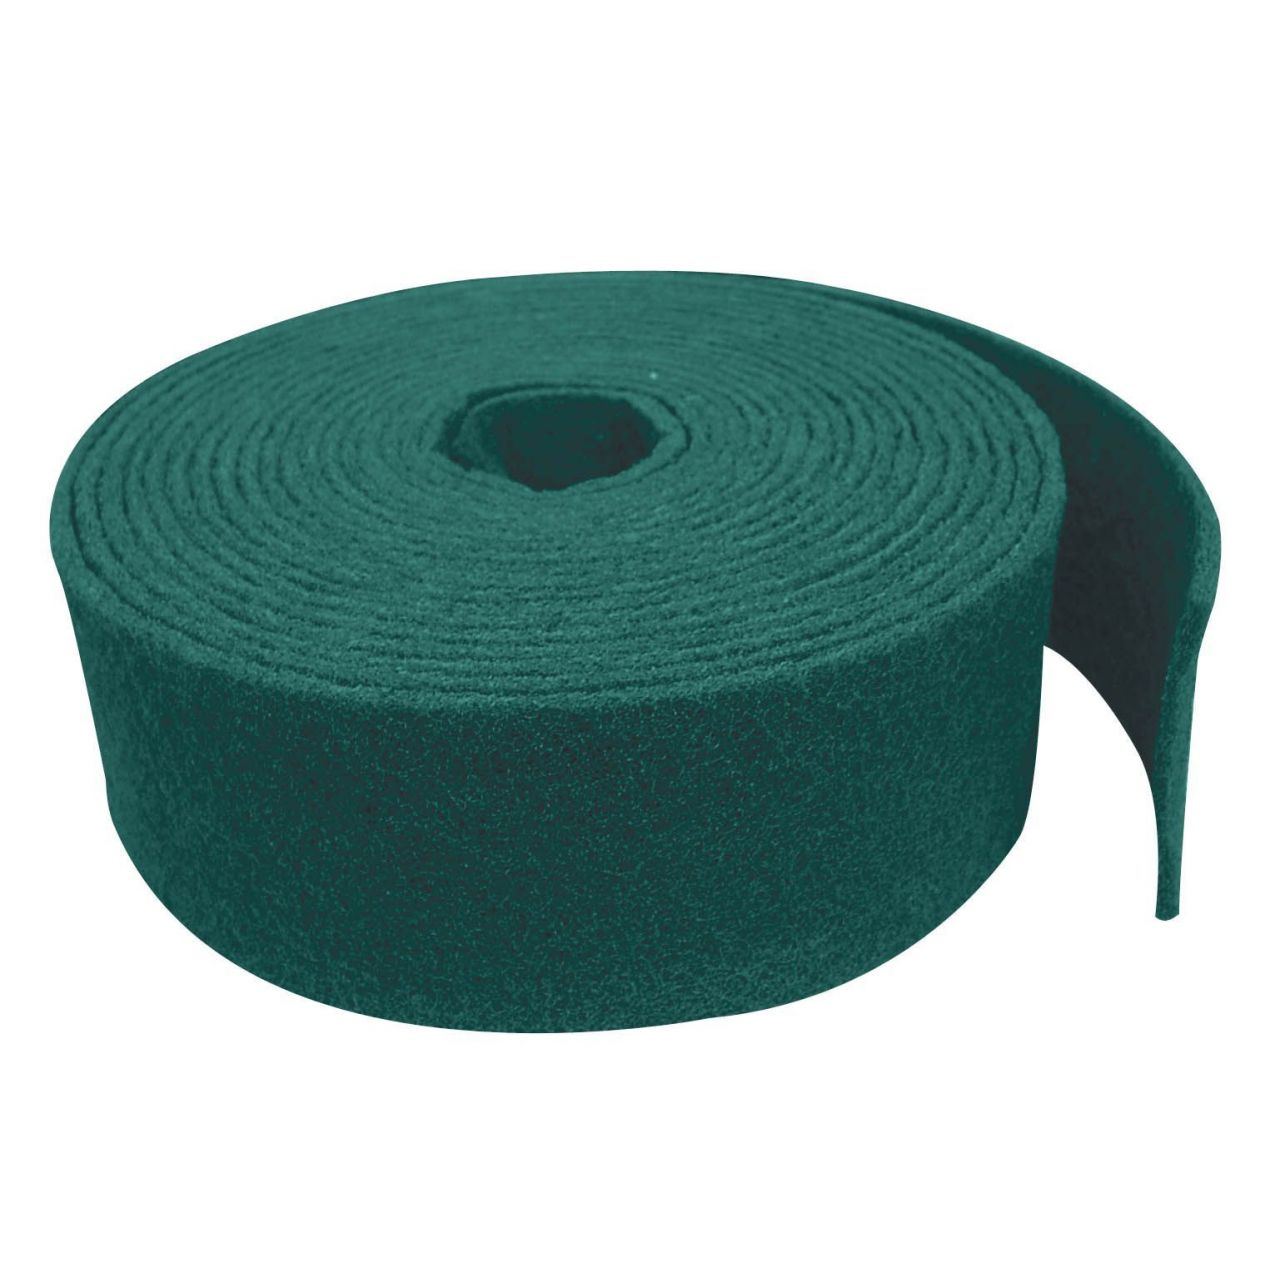 Rollos fibra abrasiva sin tejer calidad básica de menor densidad (Ancho 120 mm; Largo 10.000 mm; Grano VF-280/320)